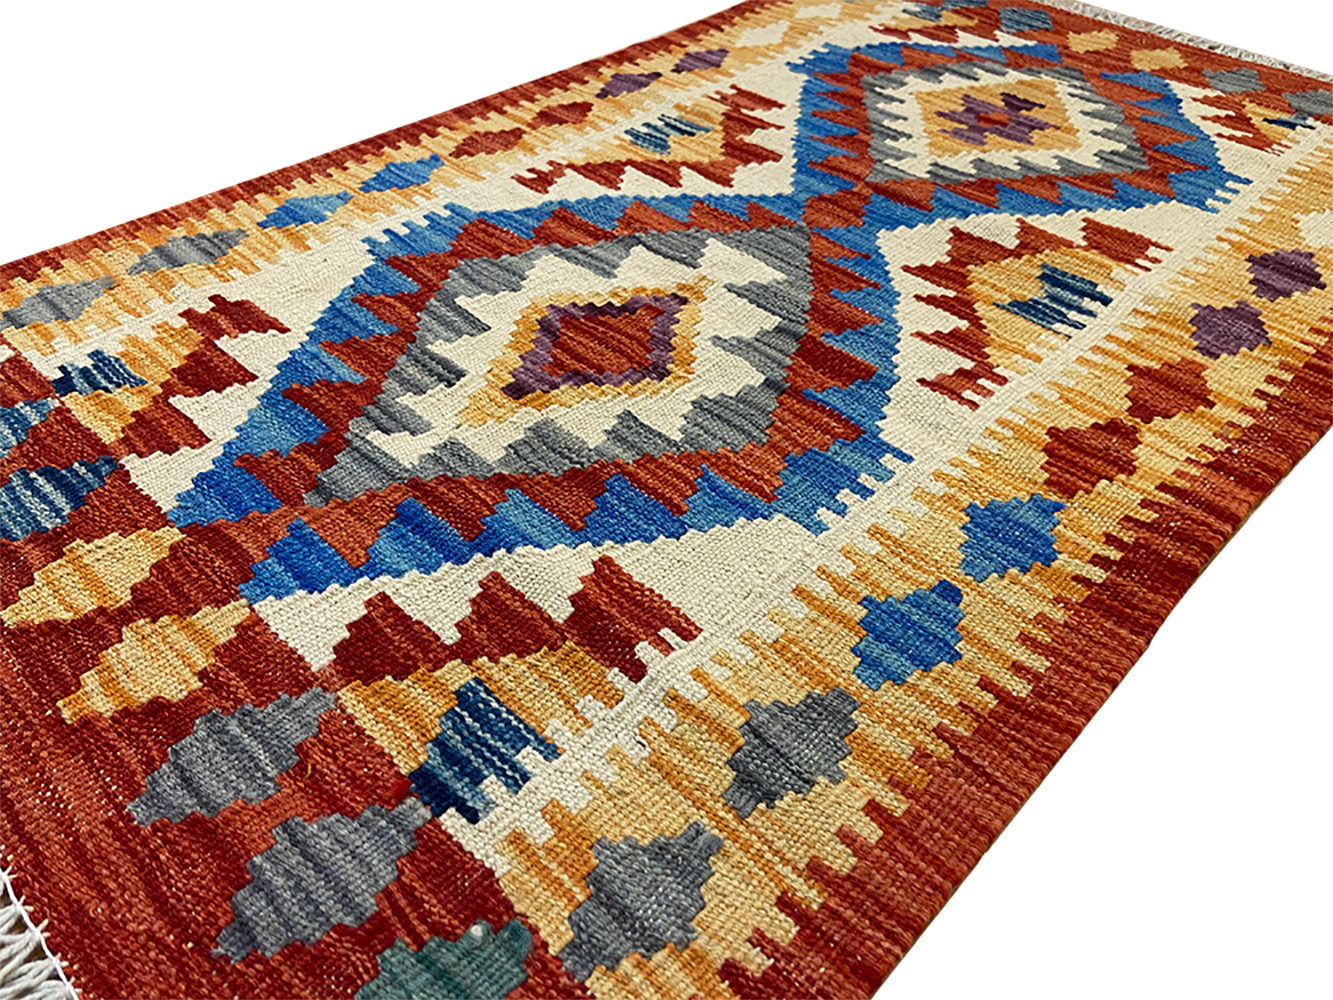 Handmade Colorful Kilim Area Rug 1' 11" X 3' 1"